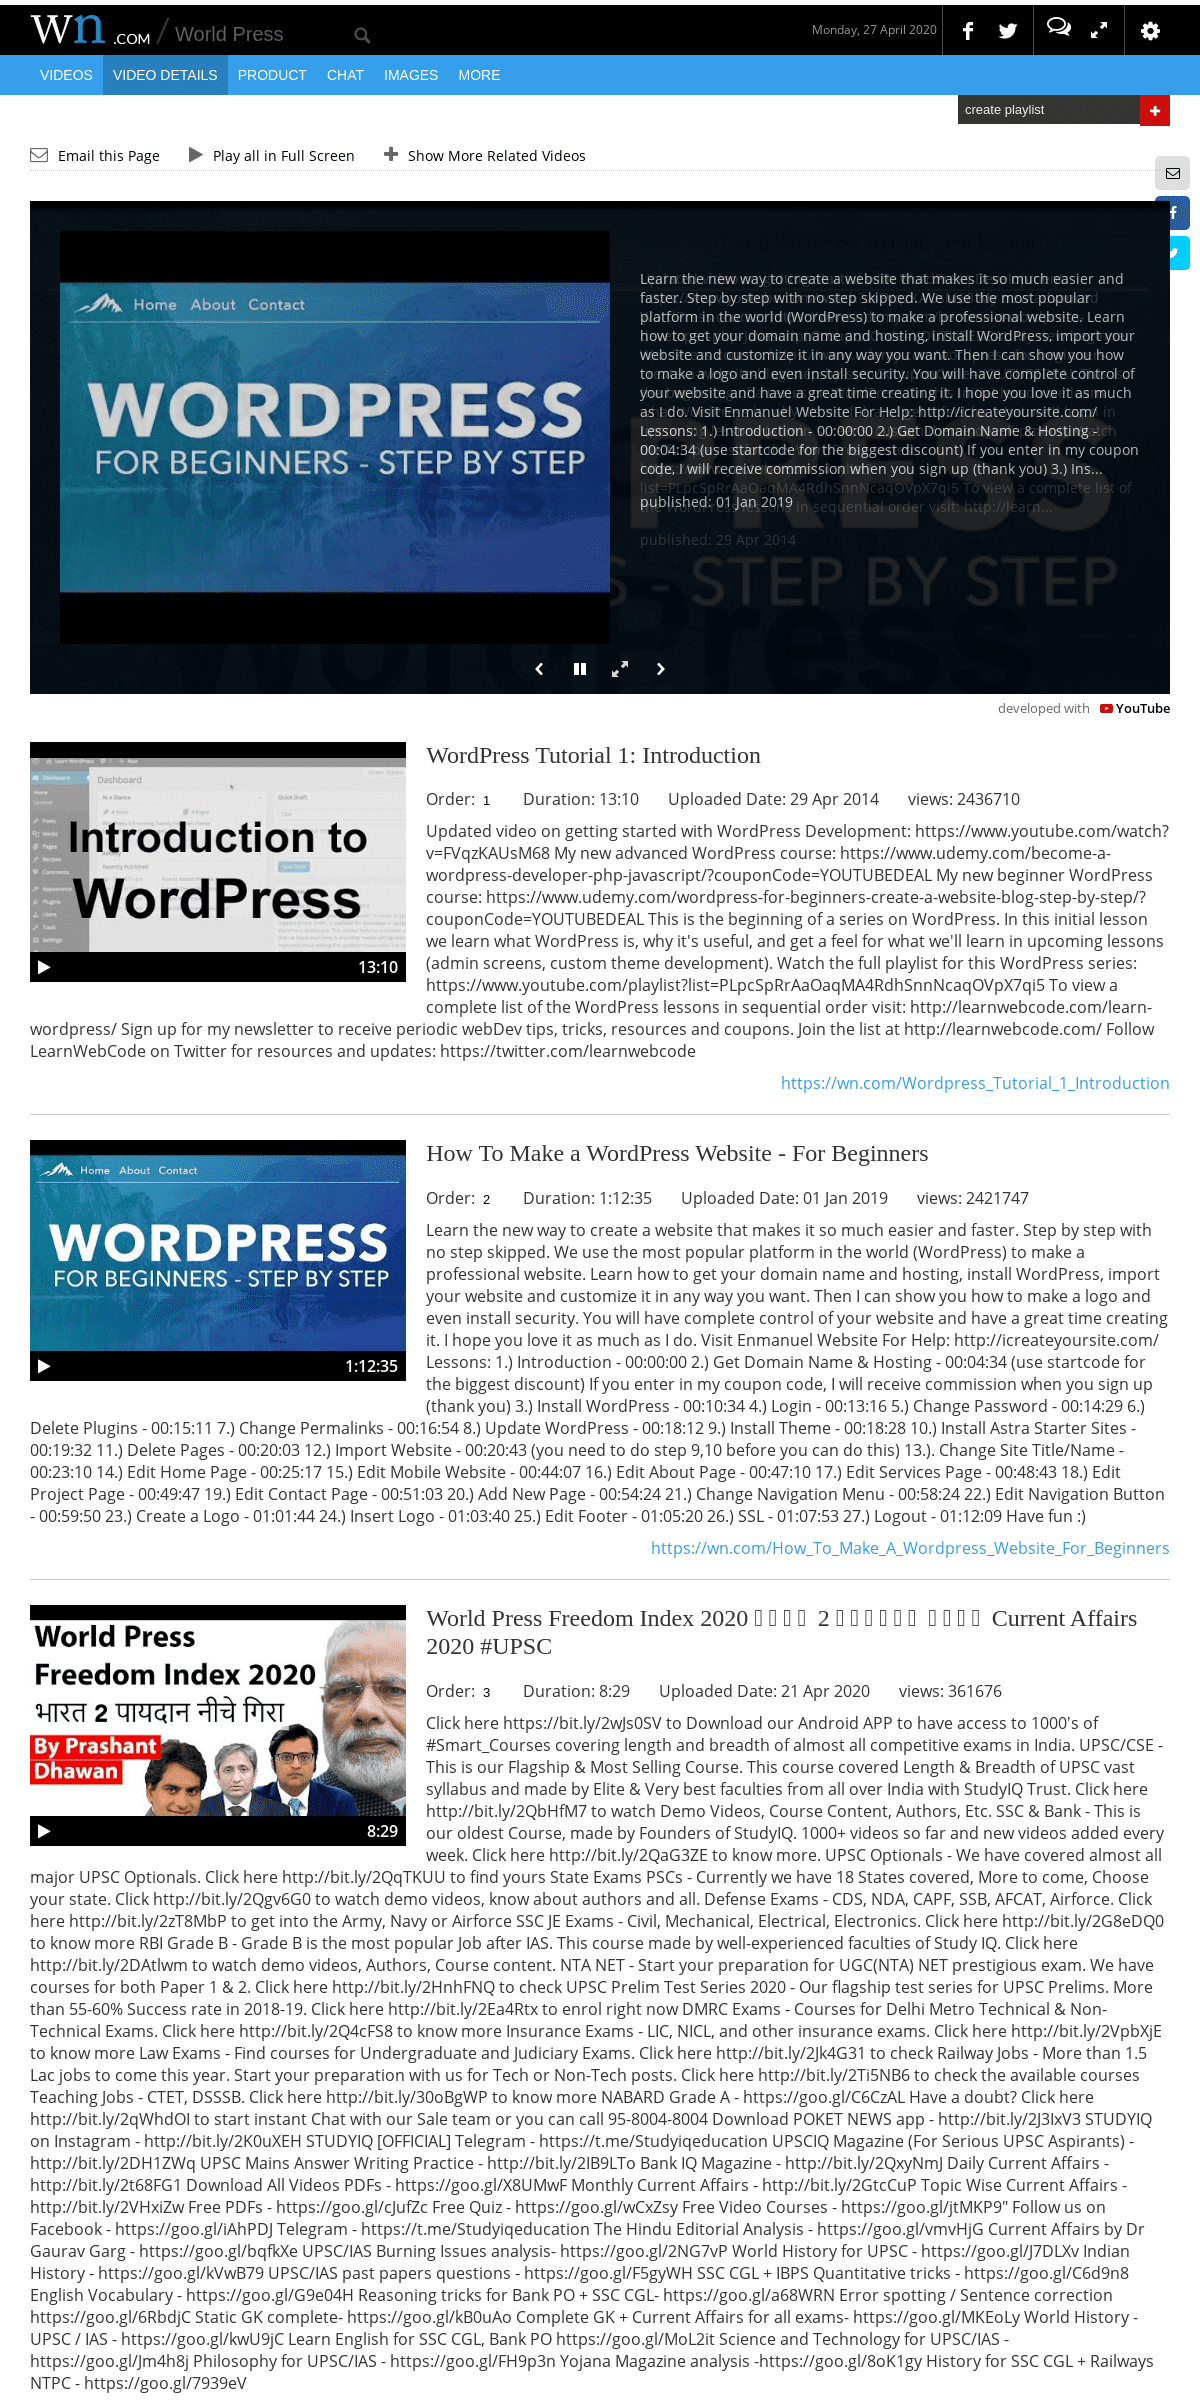 A complete backup of worldpress.com